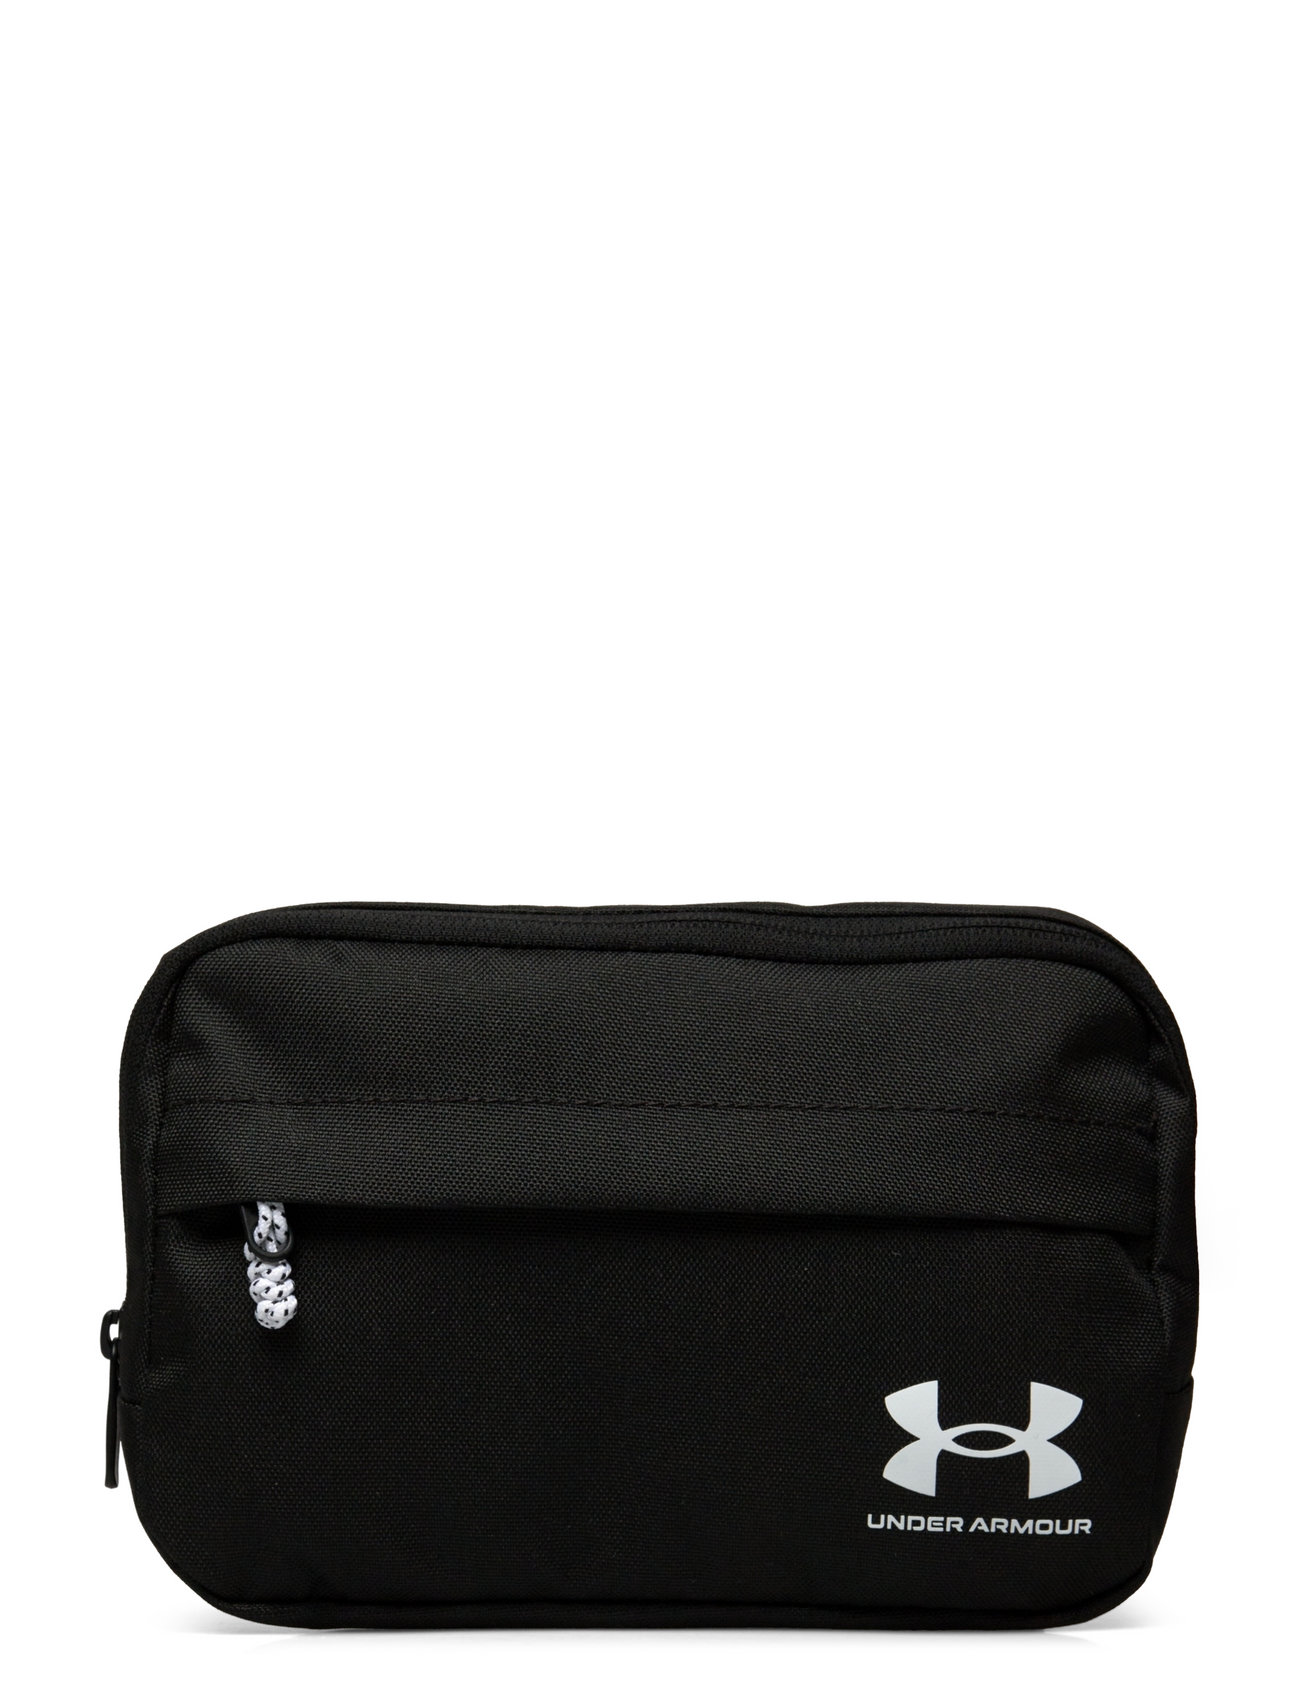 bag UNDER ARMOUR tablet/laptop purse travel NYLON large gray | eBay